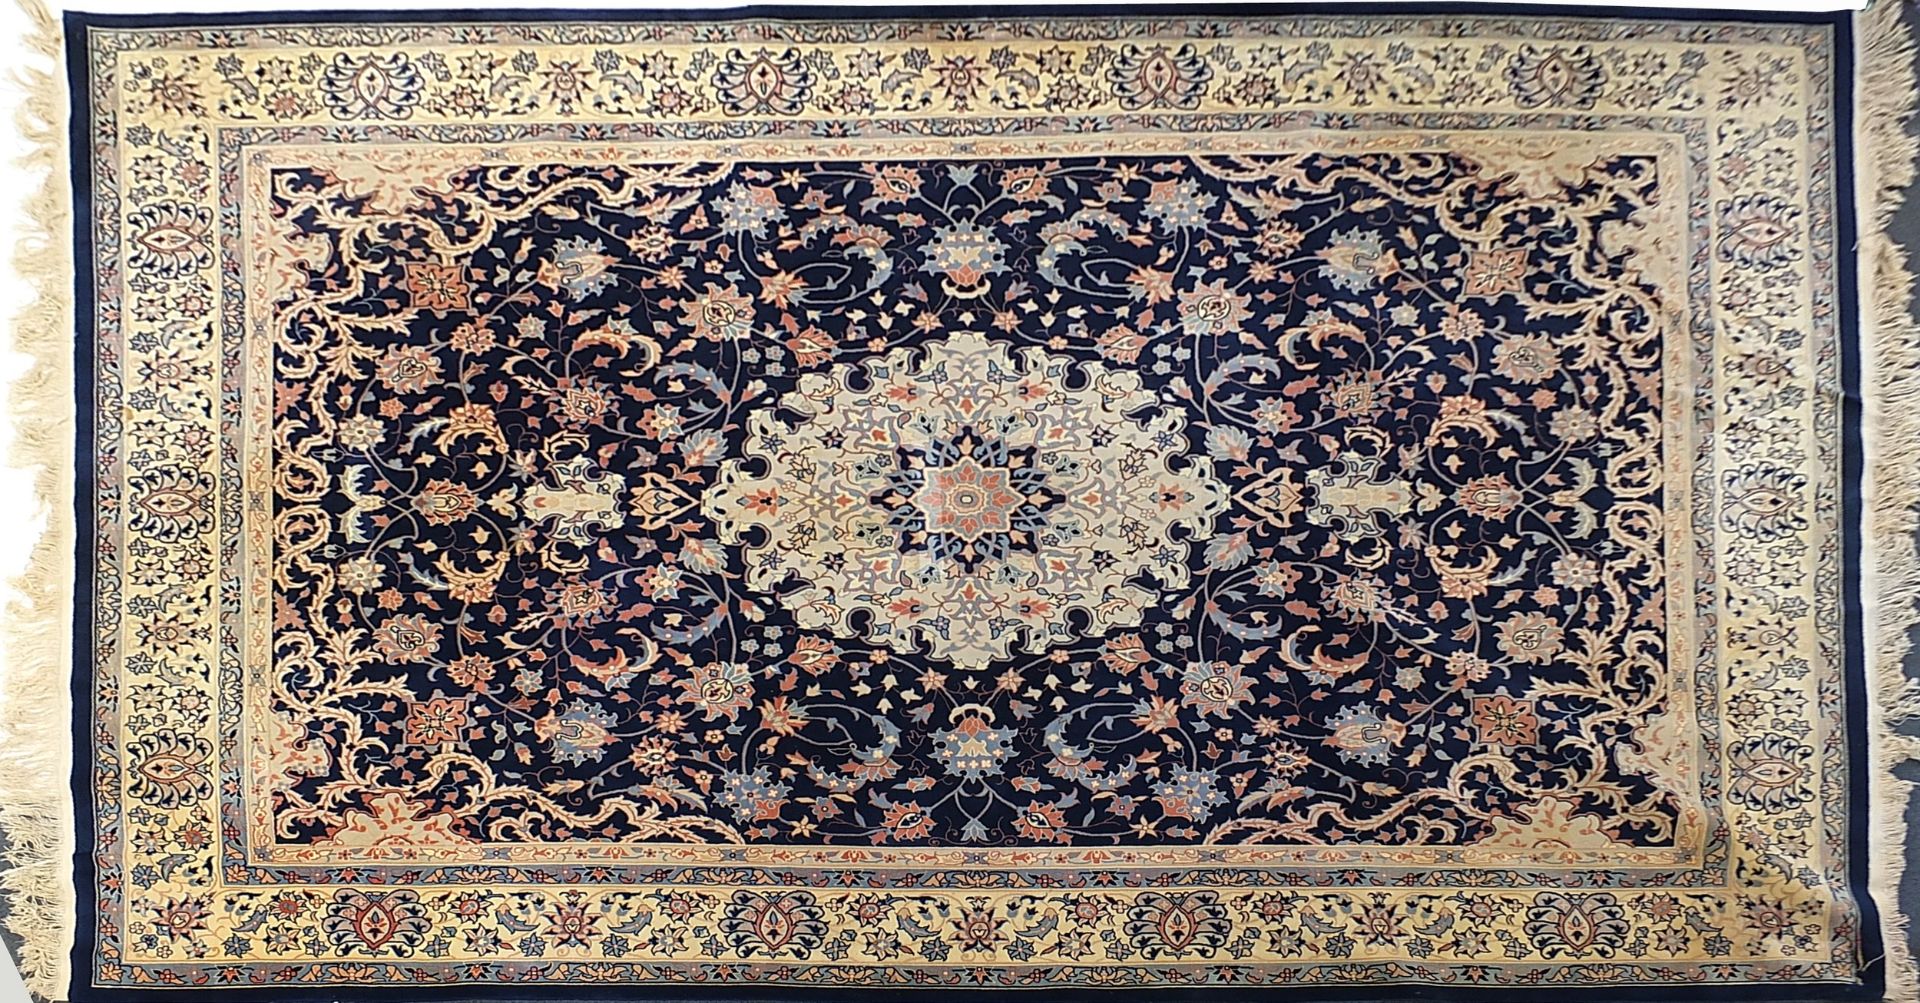 Rectangular Persian blue and cream ground carpet having an all over floral design, 360cm x 260cm